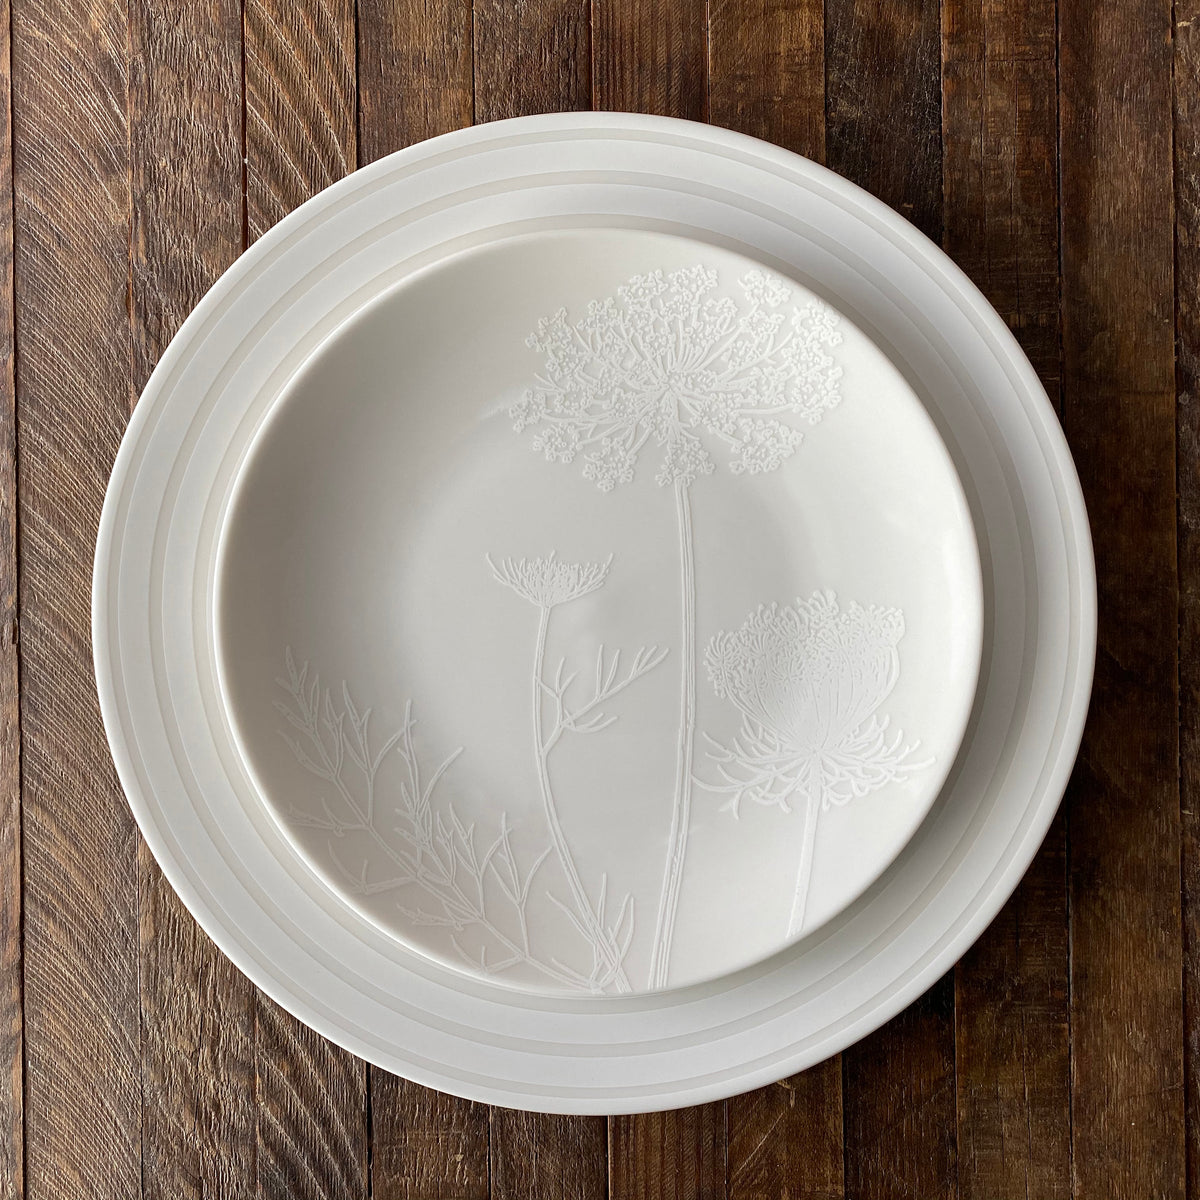 A crisp Cambridge Stripe White Rimmed Dinner plate with dandelions on it by Caskata Artisanal Home.